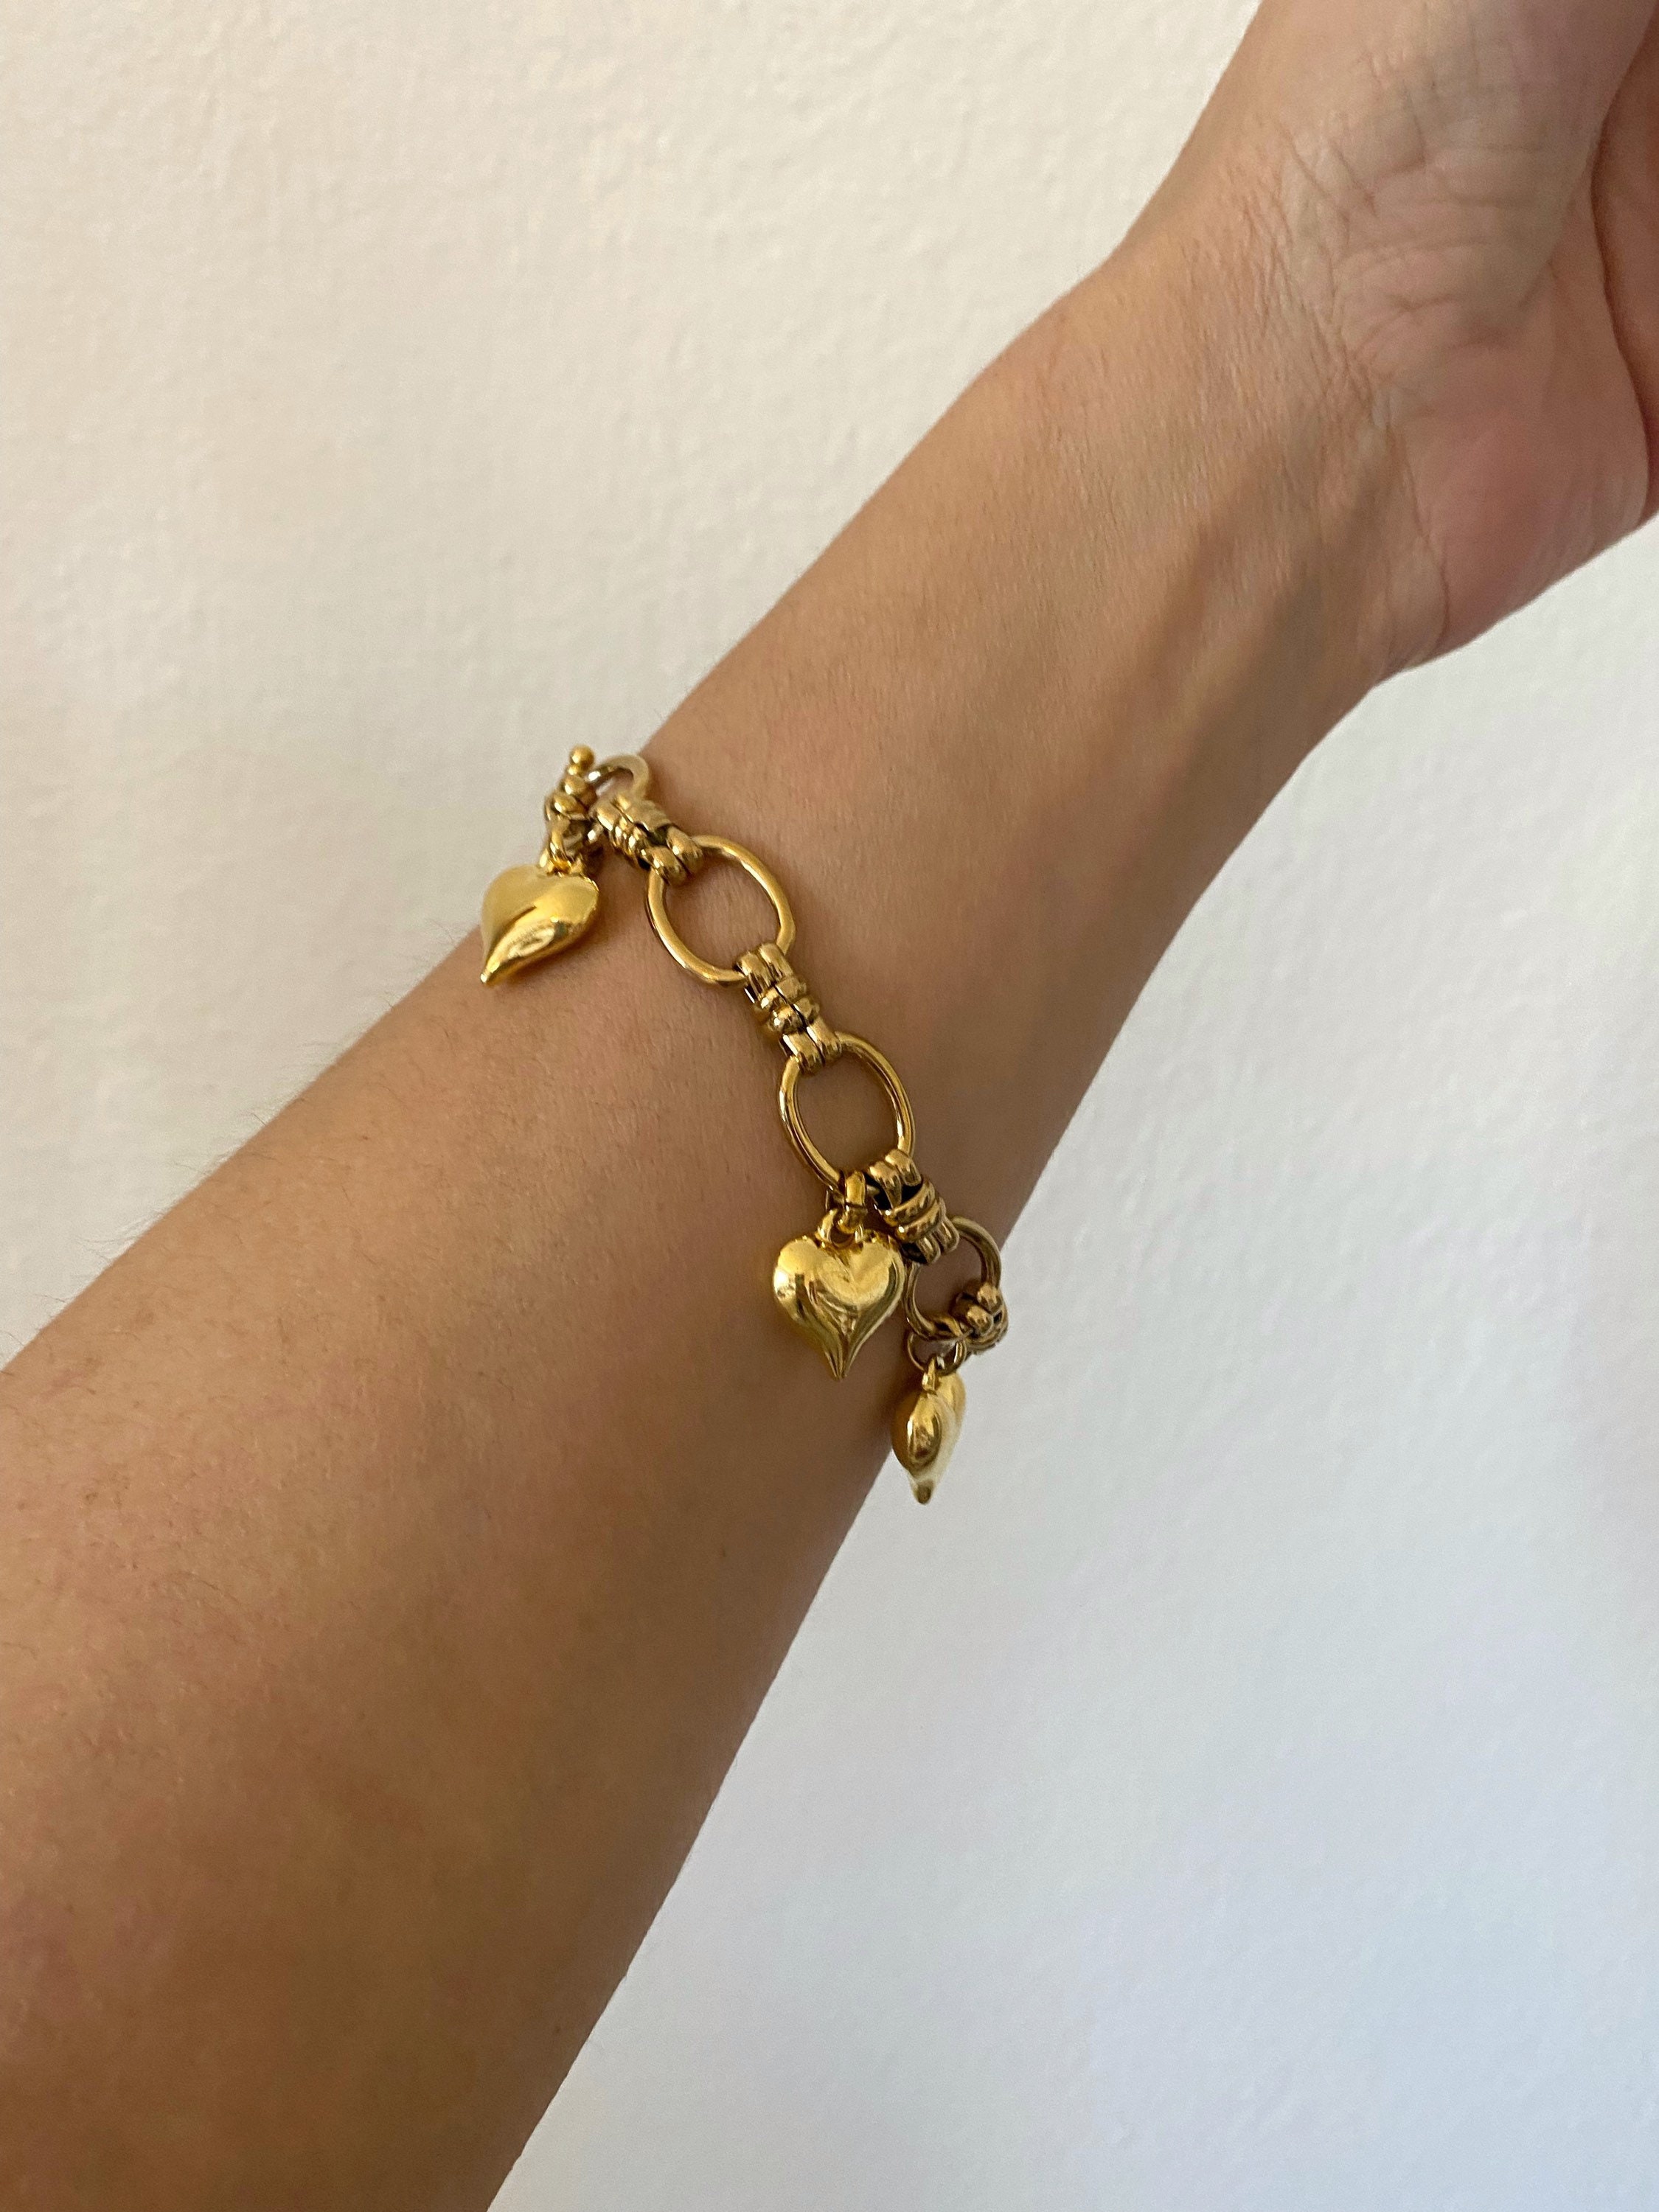 Italian Gold Charm Bracelet with 7 Charms - Bracelets/Bangles - Jewellery